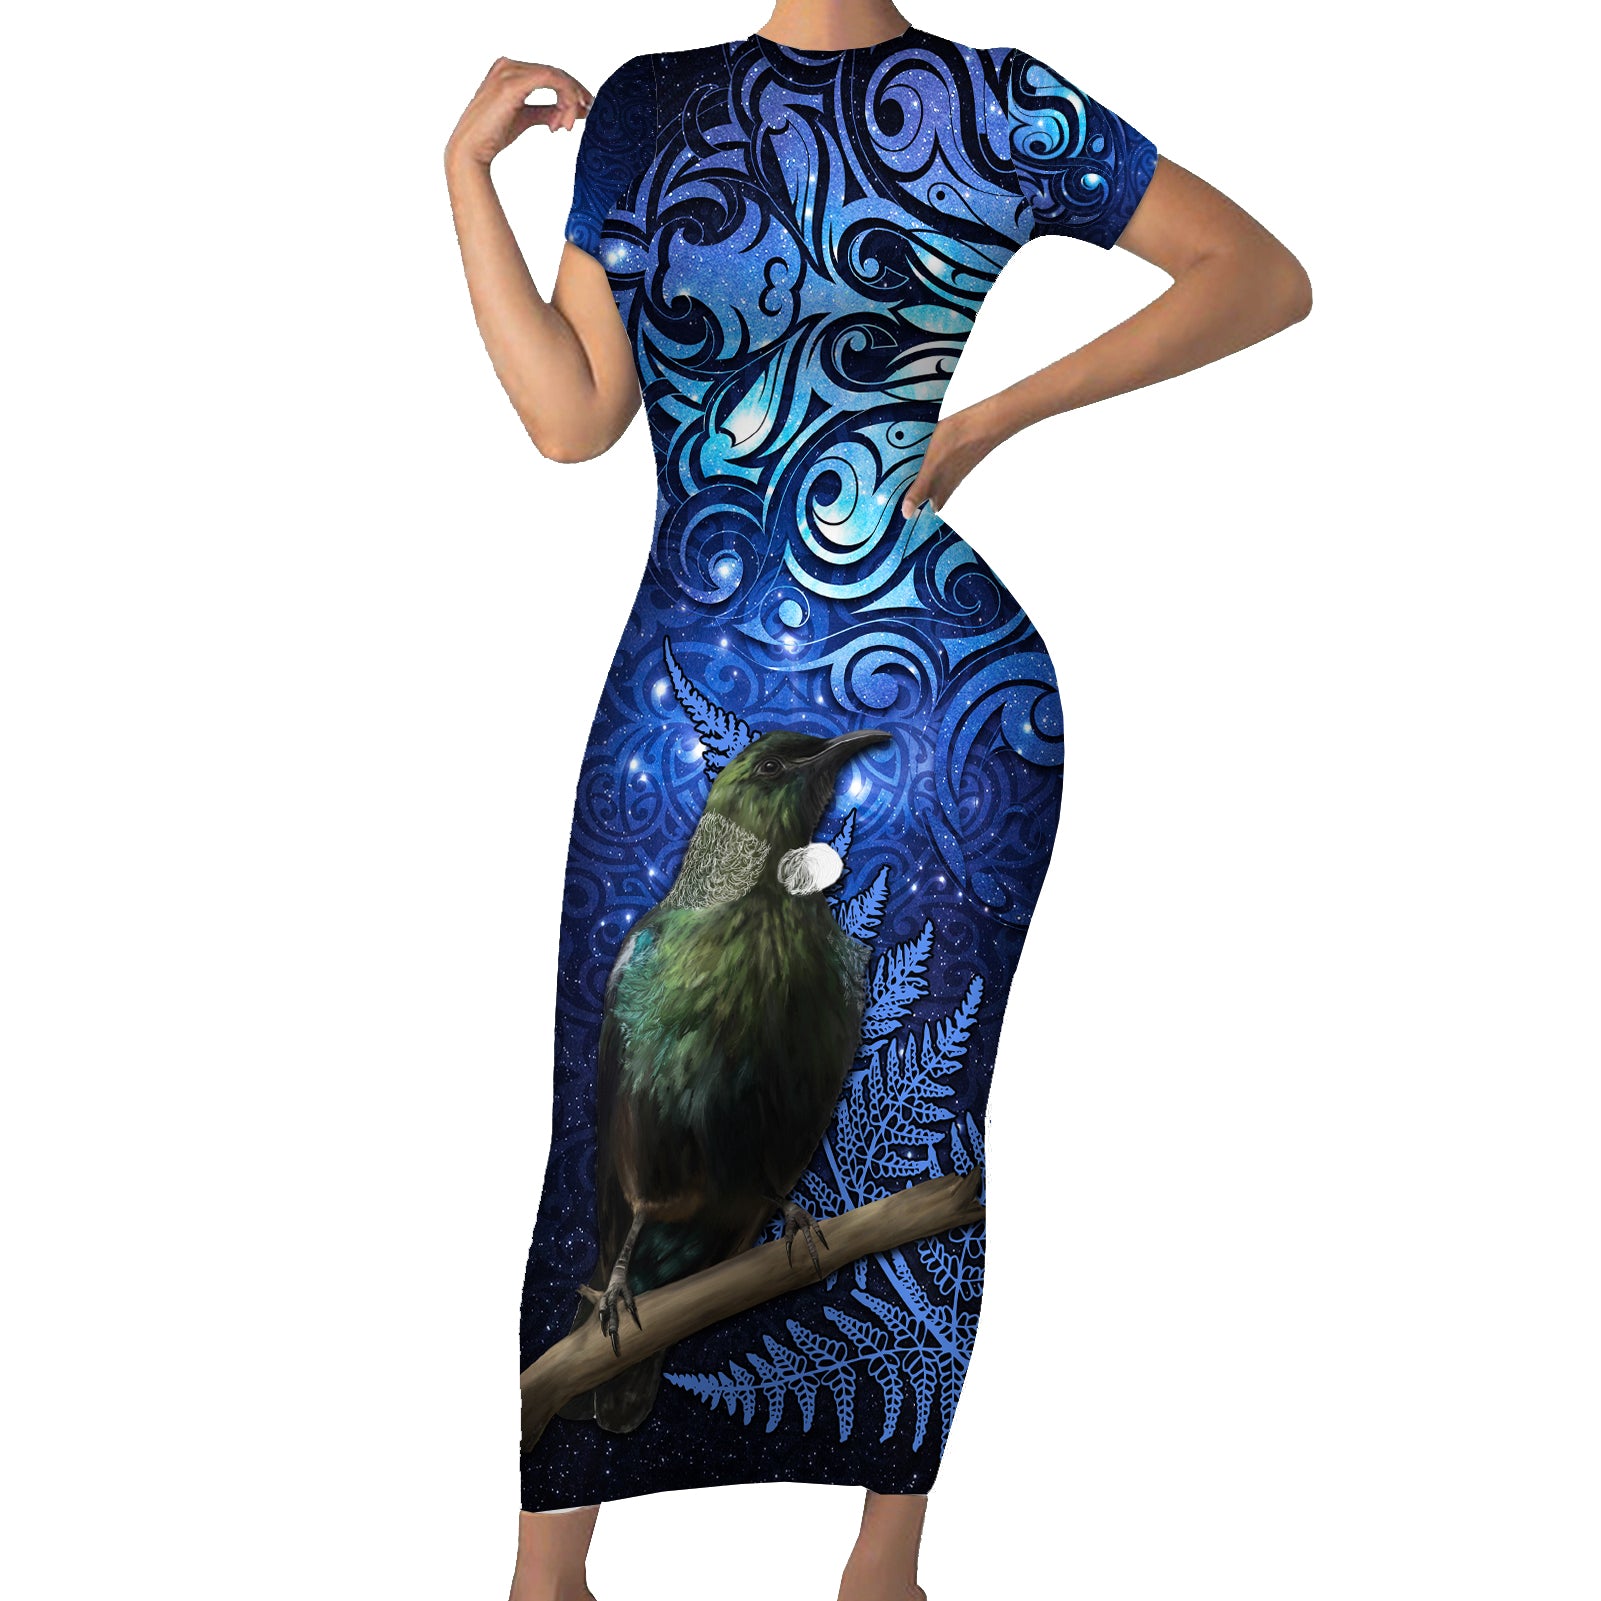 New Zealand Tui Bird Matariki Short Sleeve Bodycon Dress Maori New Year with Galaxy Fern